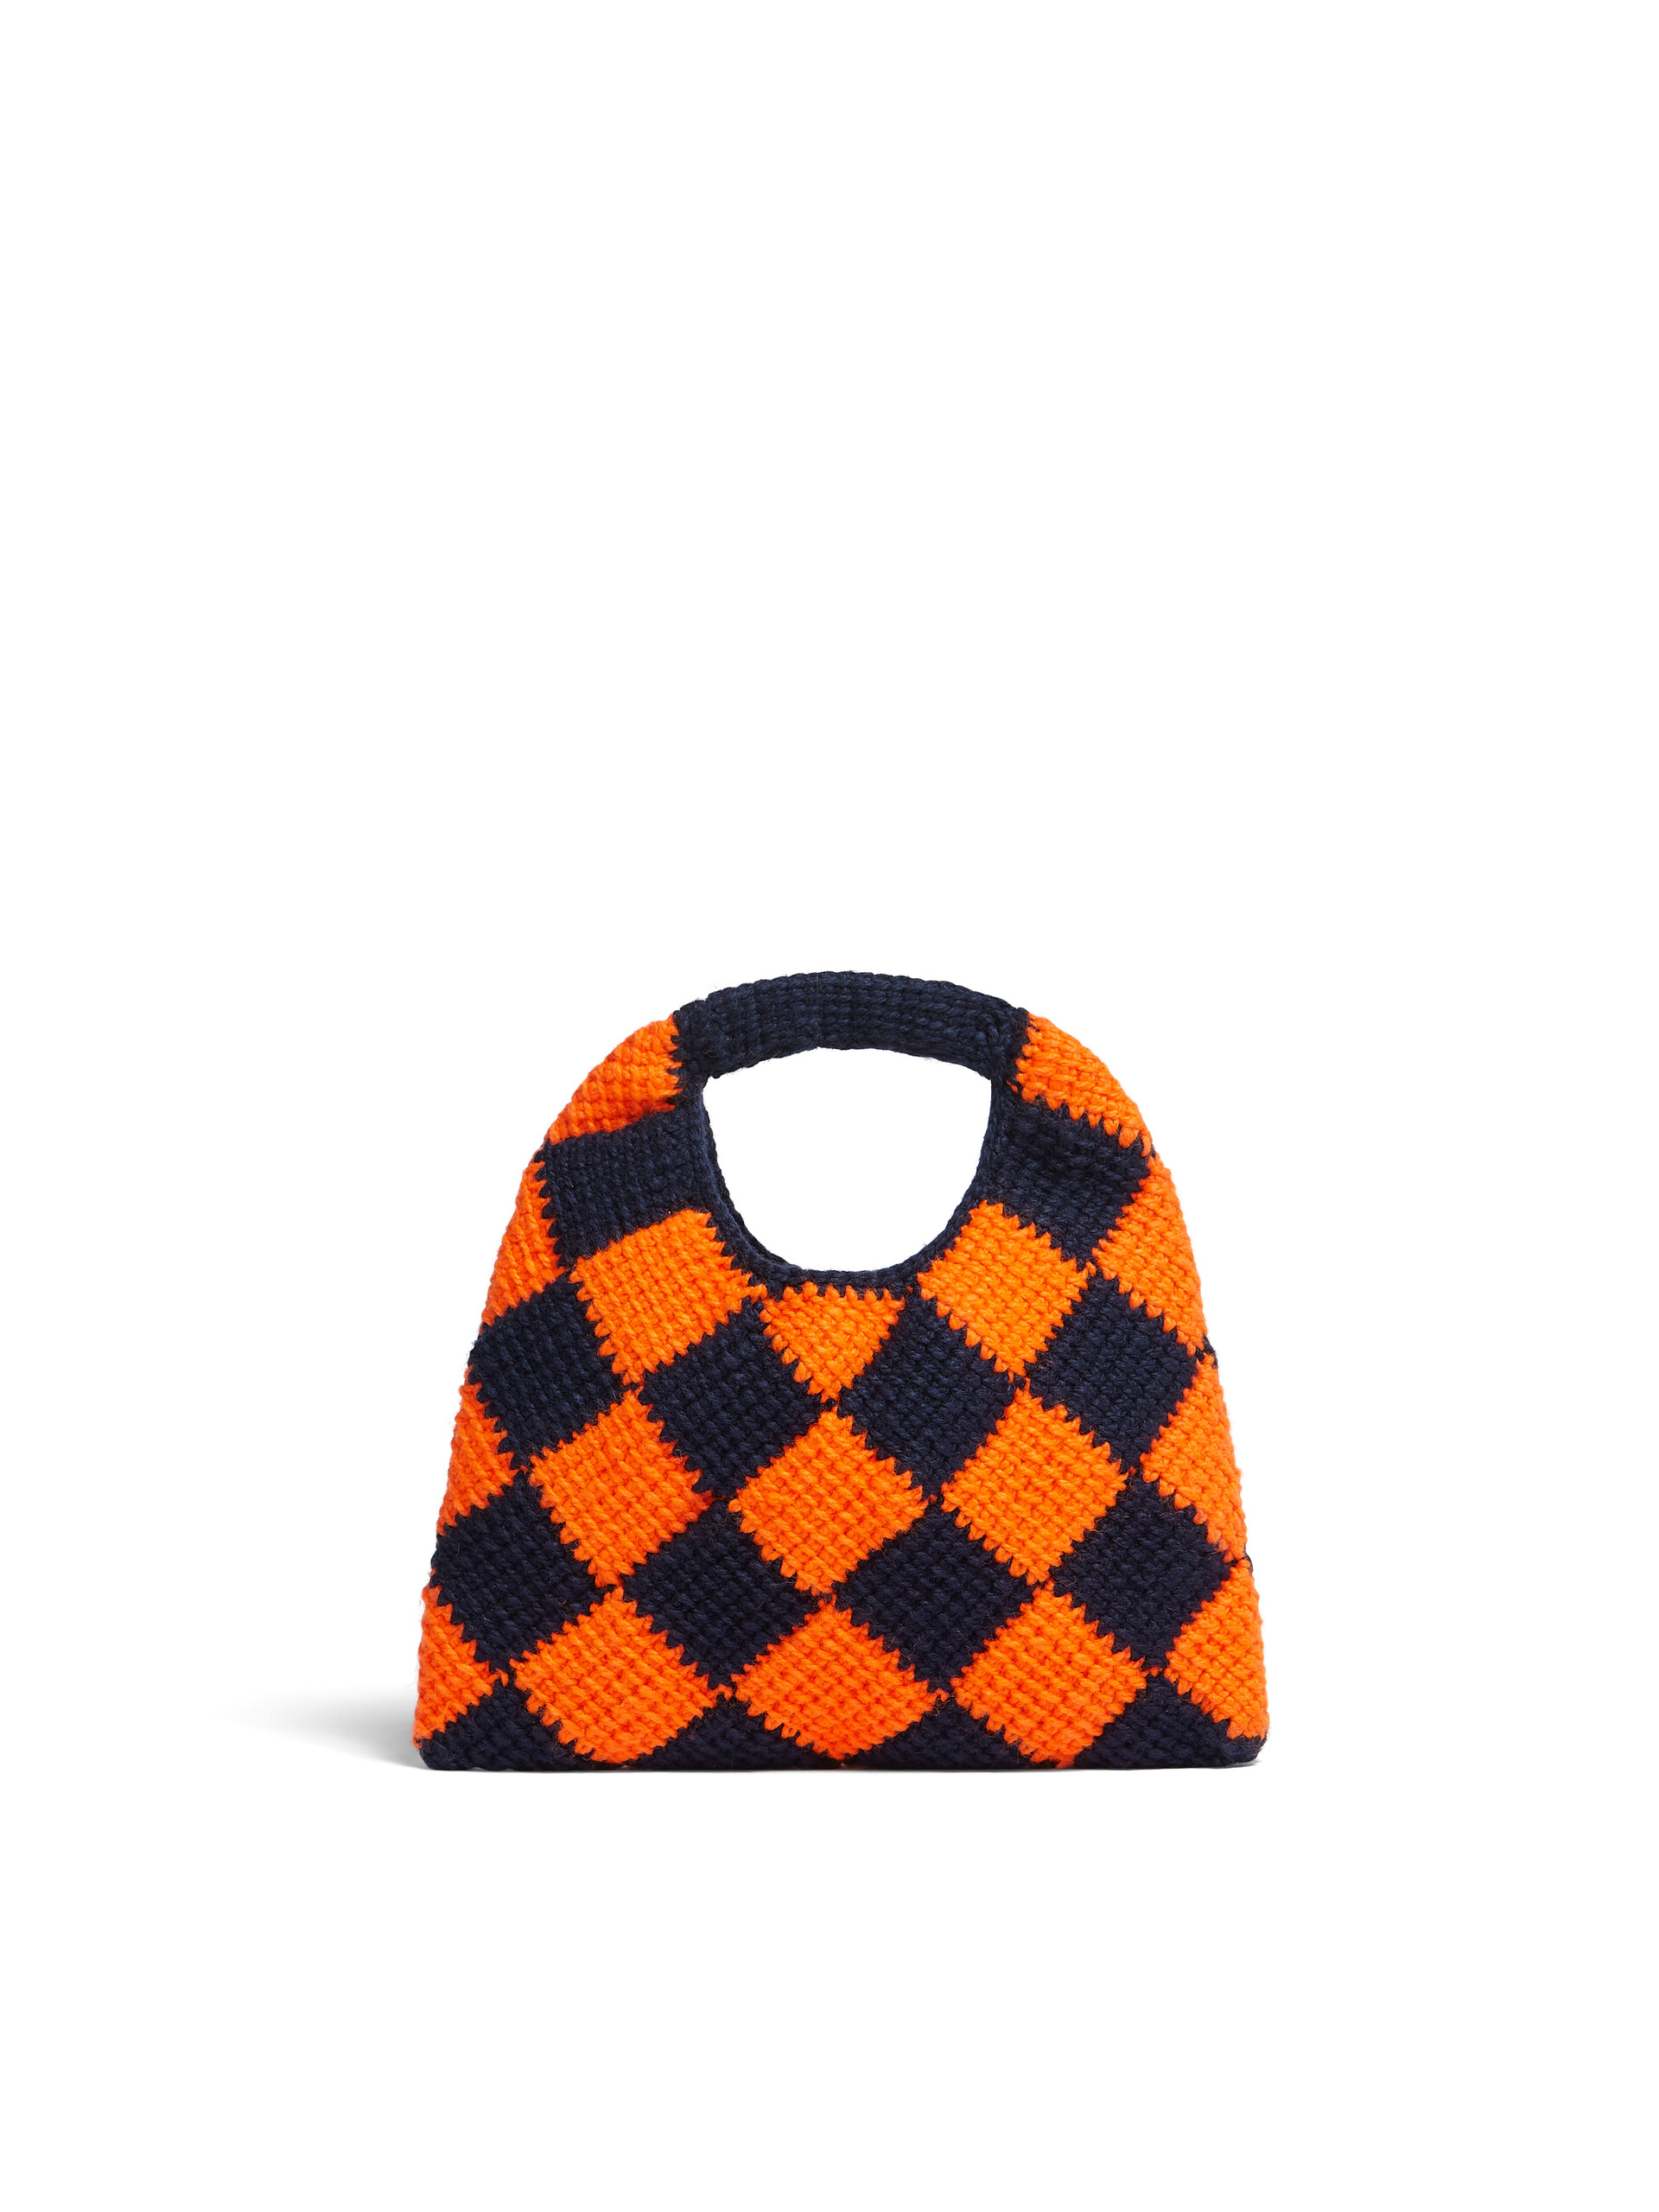 MARNI MARKET DIAMOND MINI bag in orange and blue tech wool - Shopping Bags - Image 3